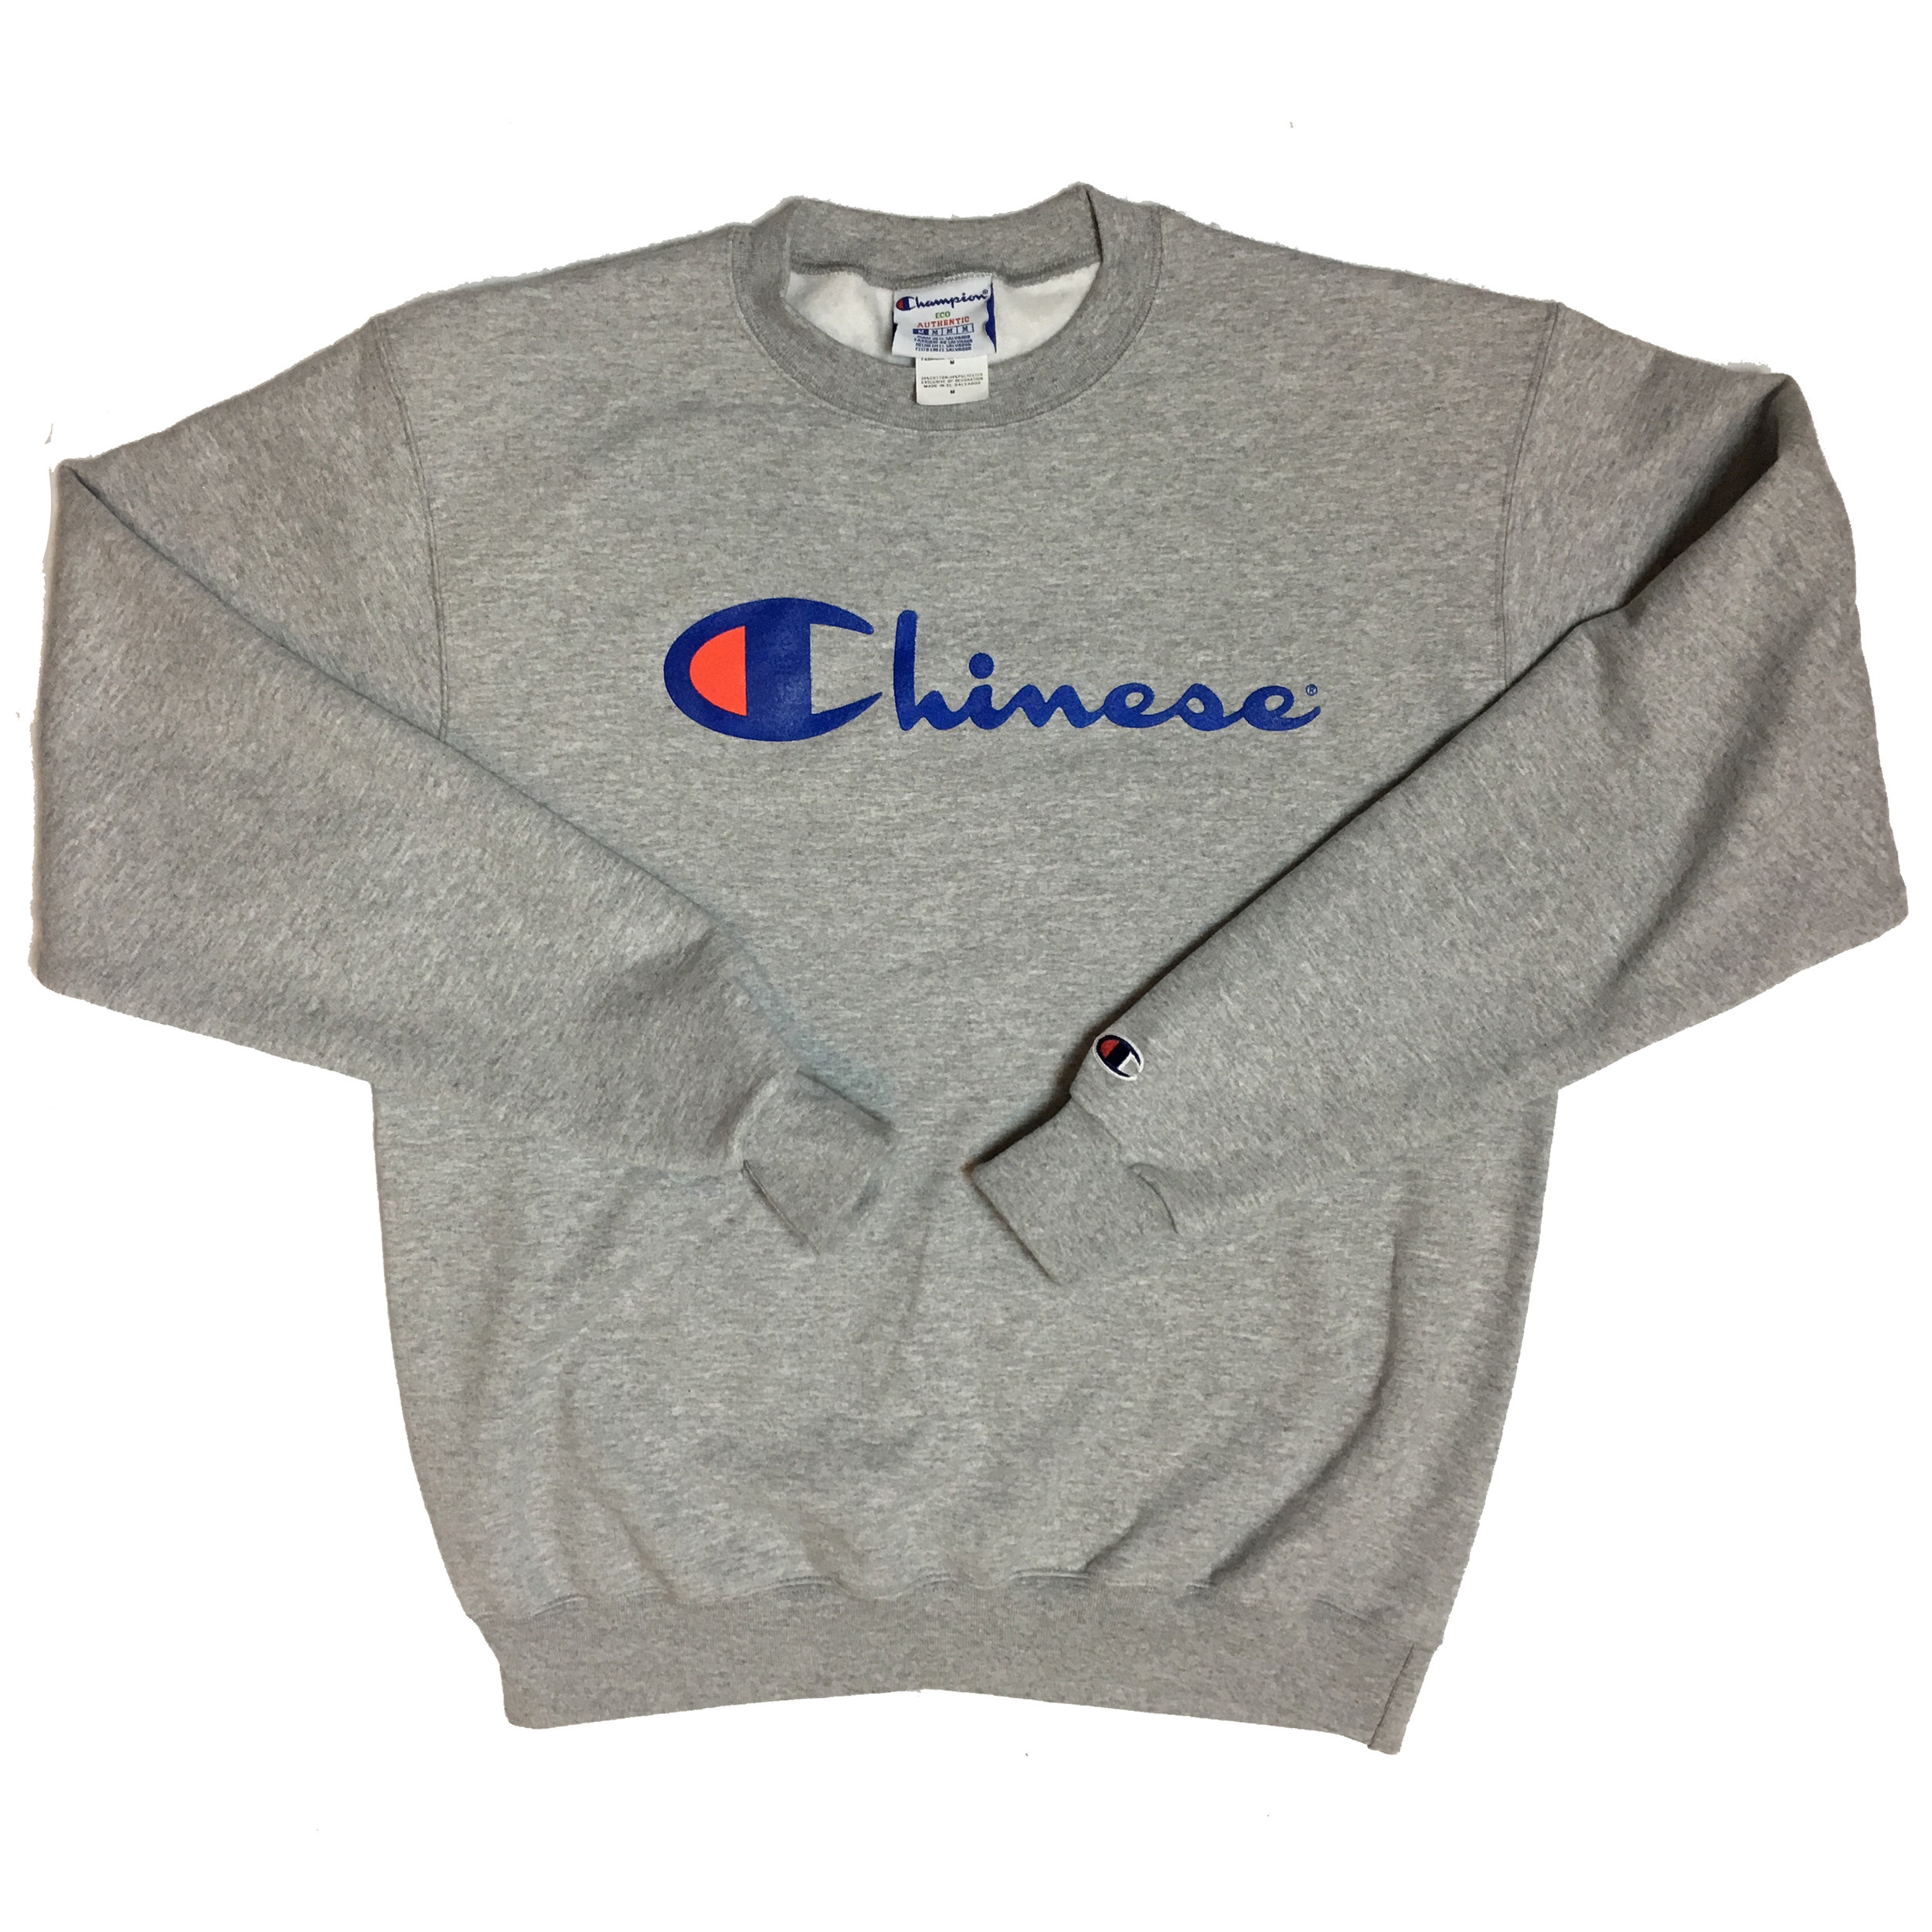 chinese sweater champion